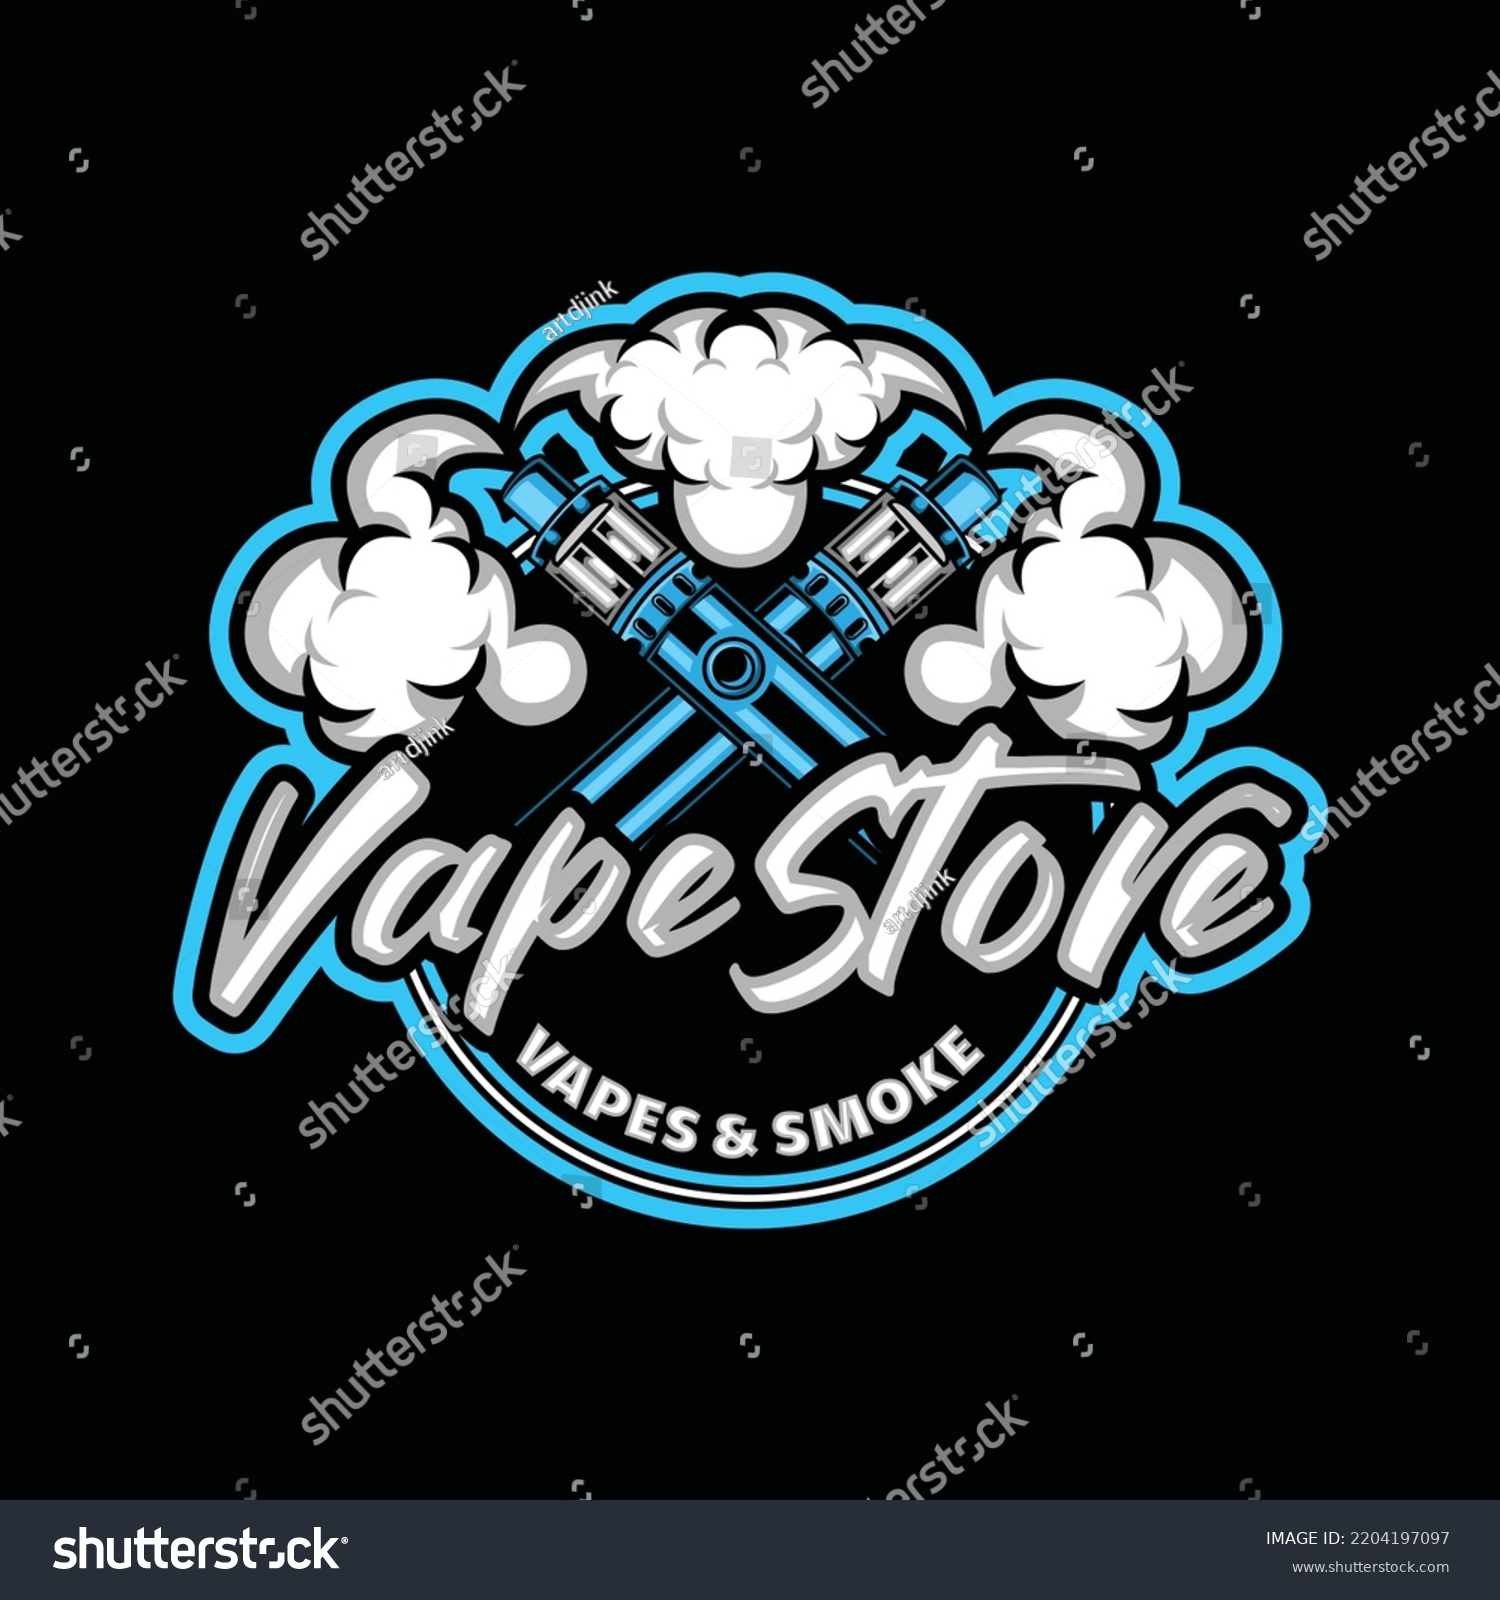 Vape Store Logo Design Vector Graphic Stock Vector Royalty Free Shutterstock